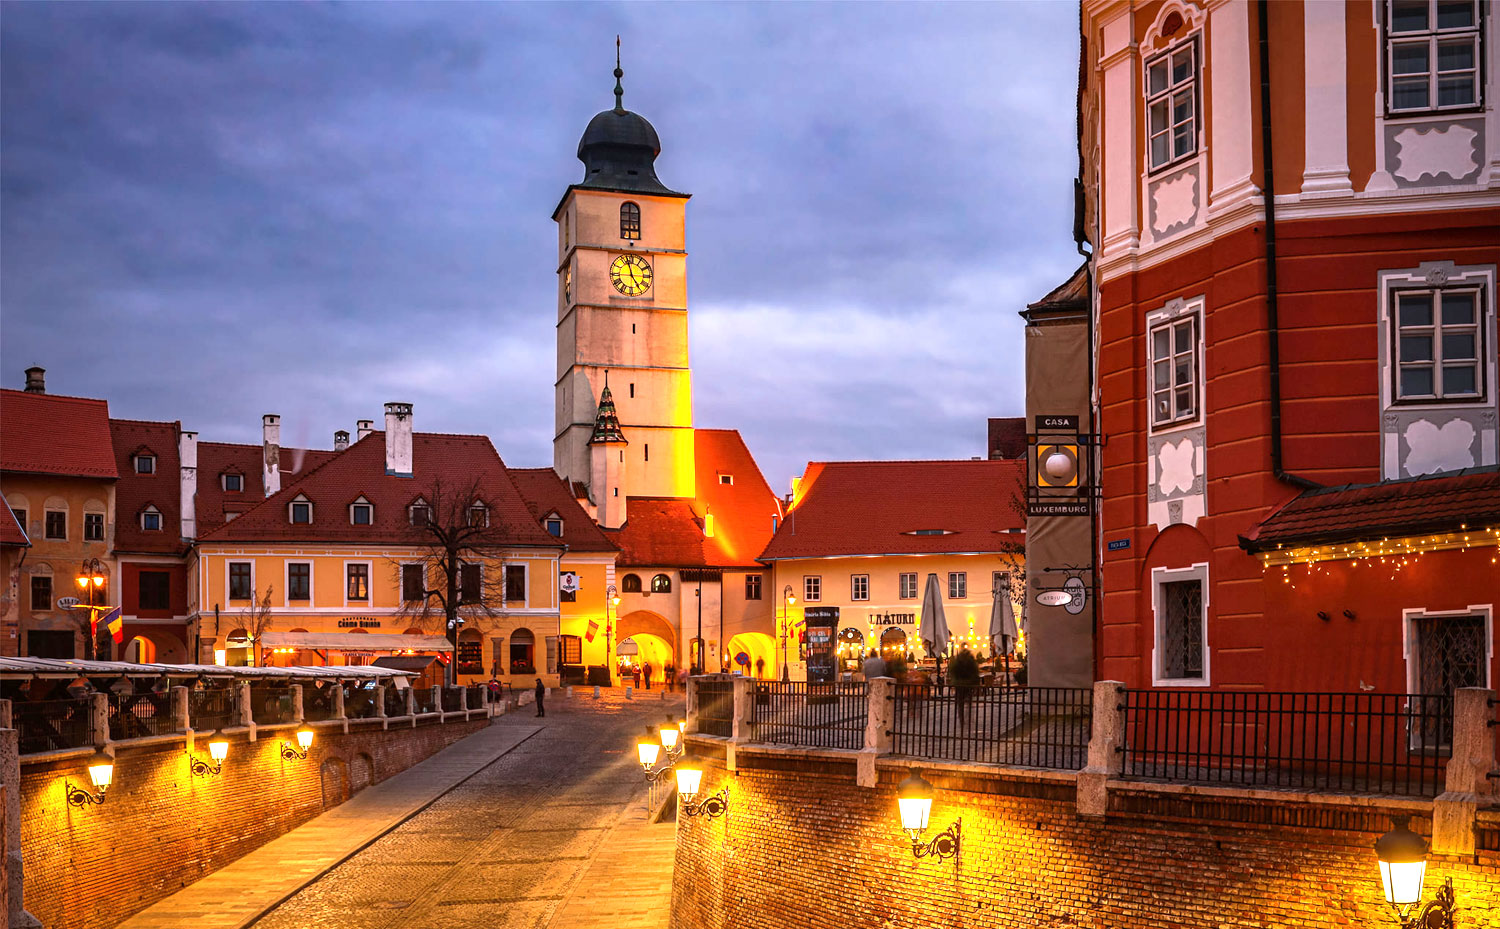 Sibiu (Hermannstadt) - A Saxon Citadel in Transylvania, Must see places